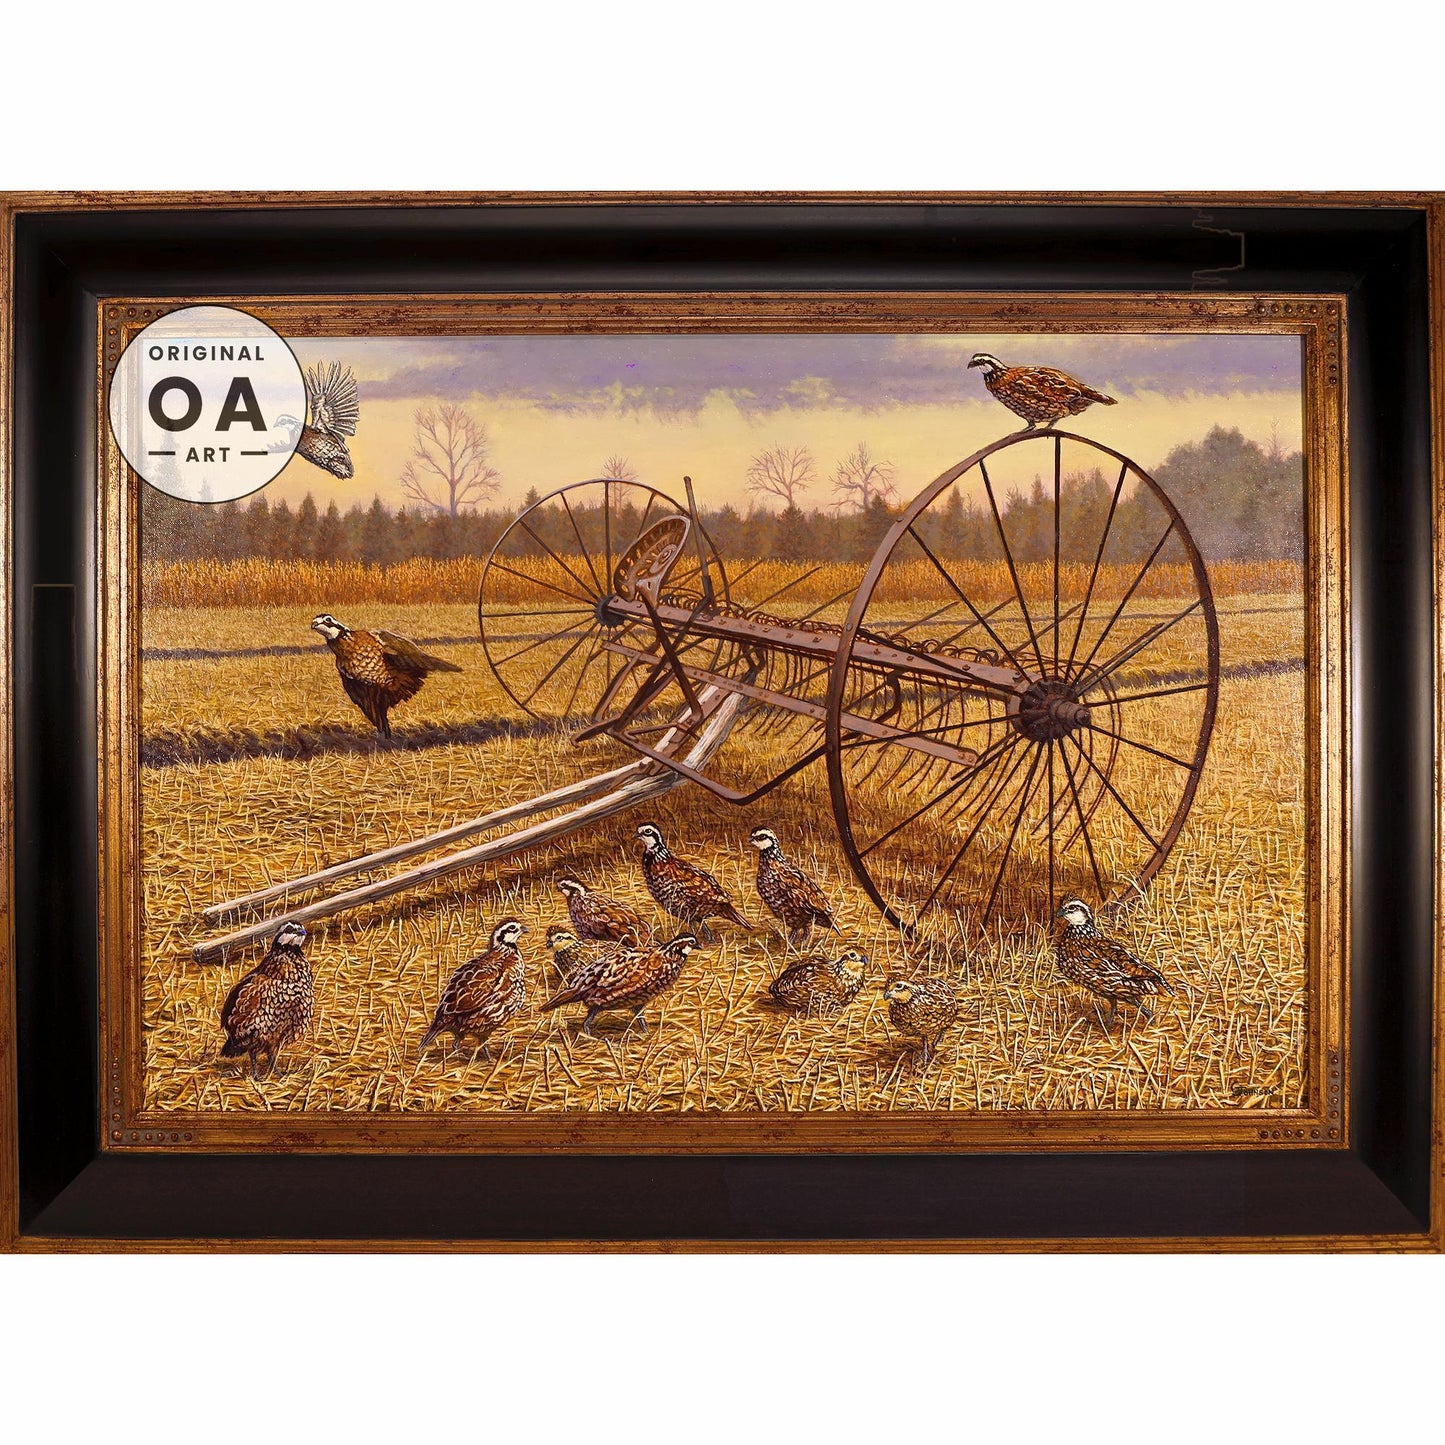 after-the-harvest-bobwhite-quail-original-oil-painting-gary-johnson-A421060018.jpg